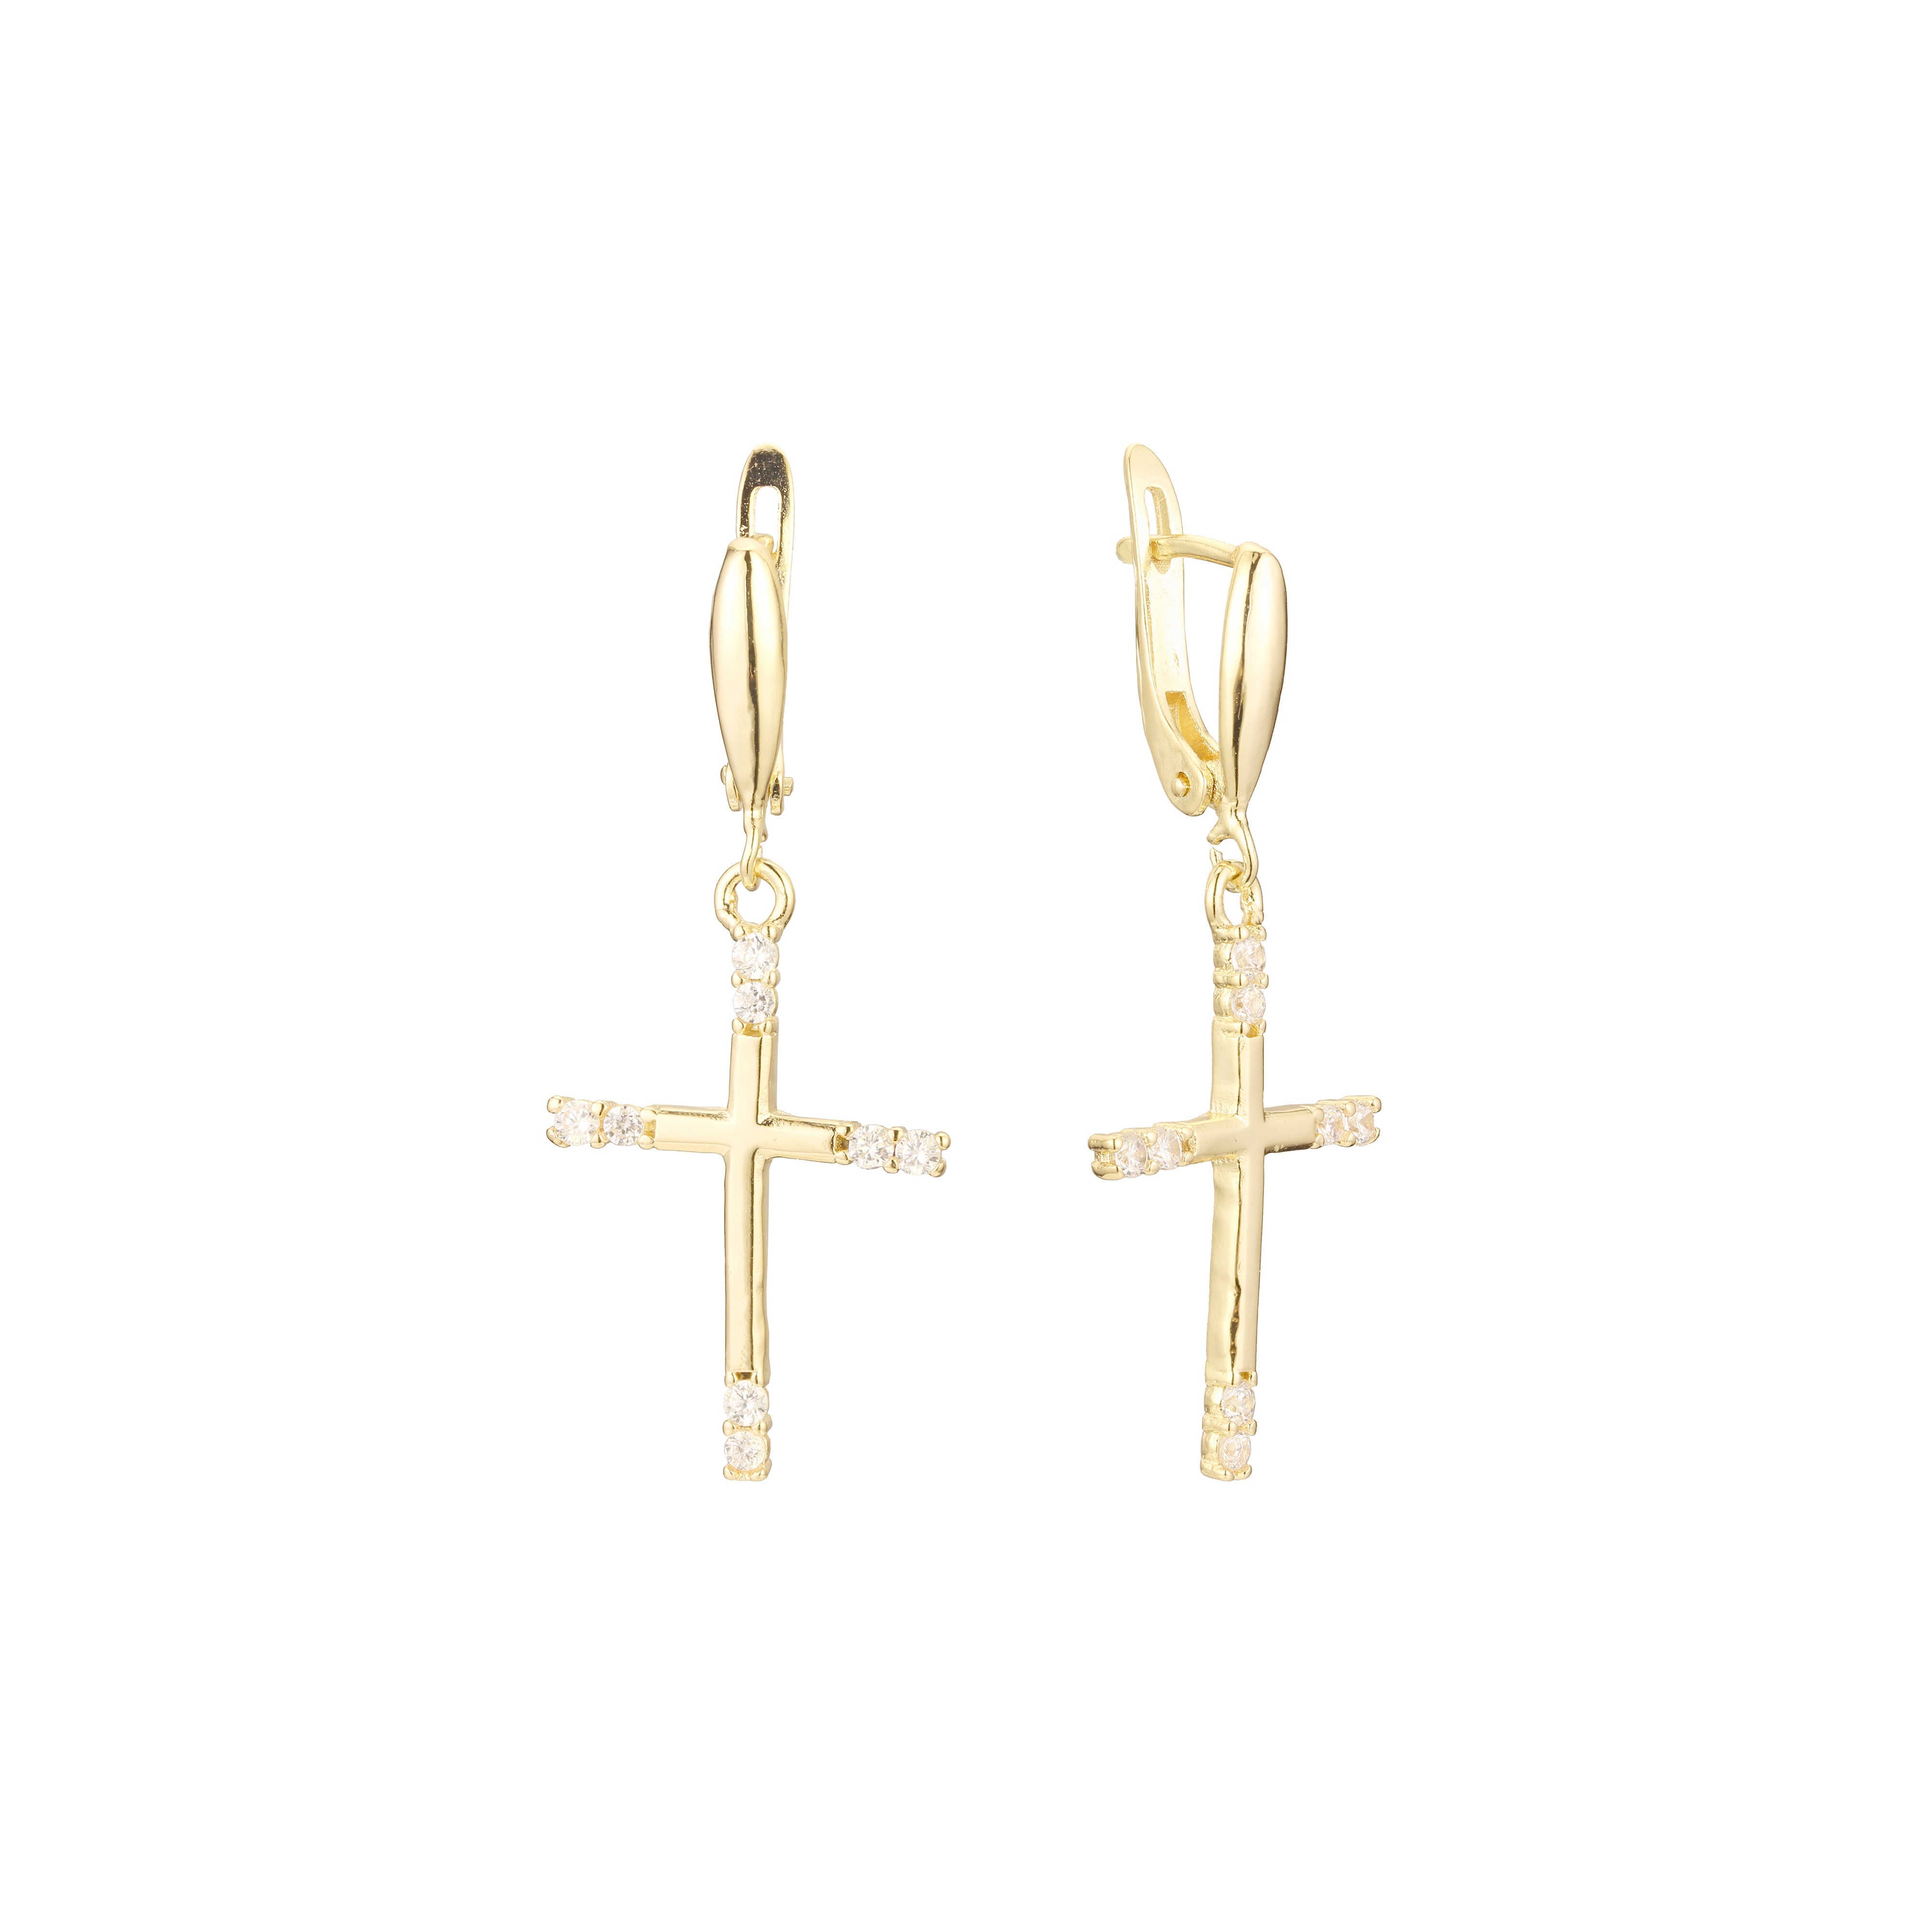 Cluster cross earrings in 14K Gold, Rose Gold plating colors